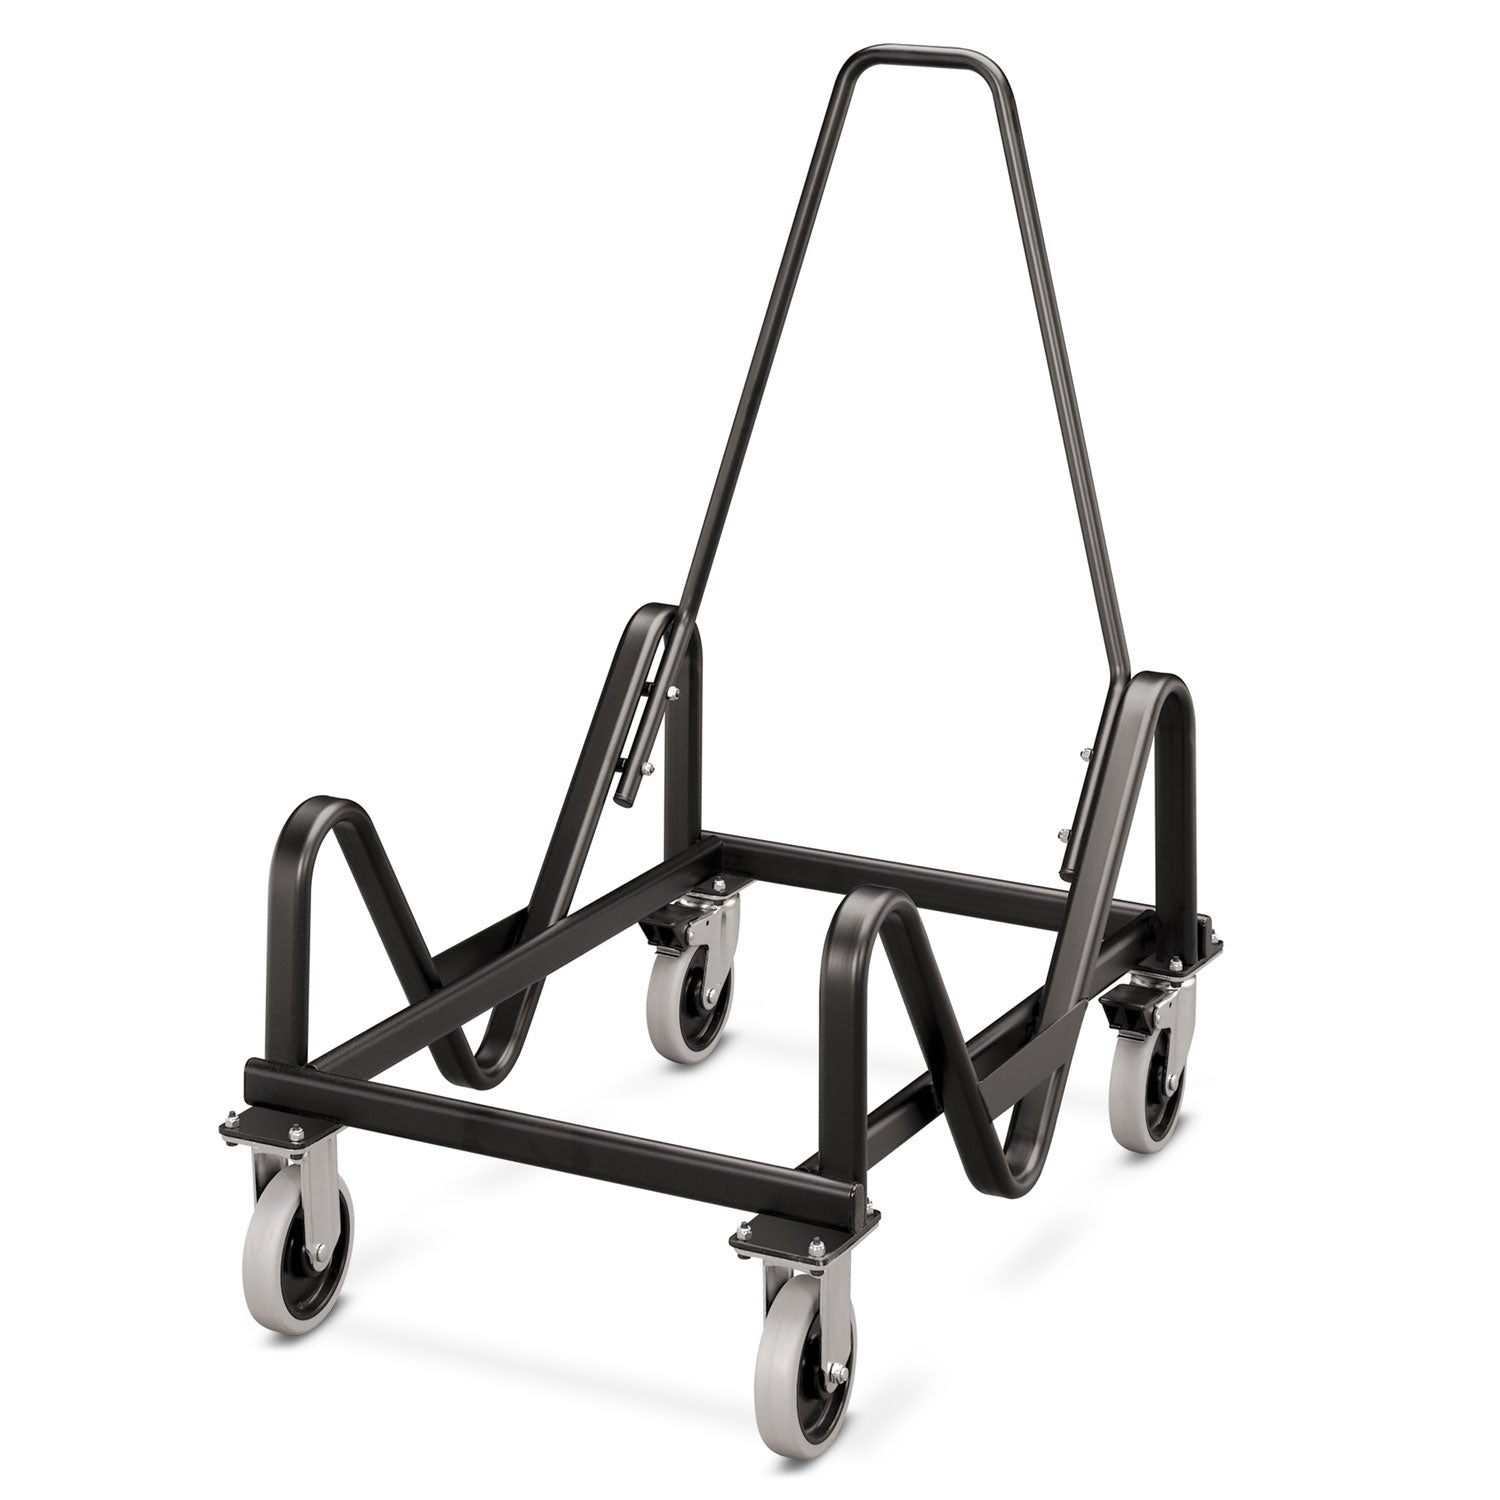 Olson Stacker Series Cart, Metal, 21.38" x 35.5" x 37", Black - 